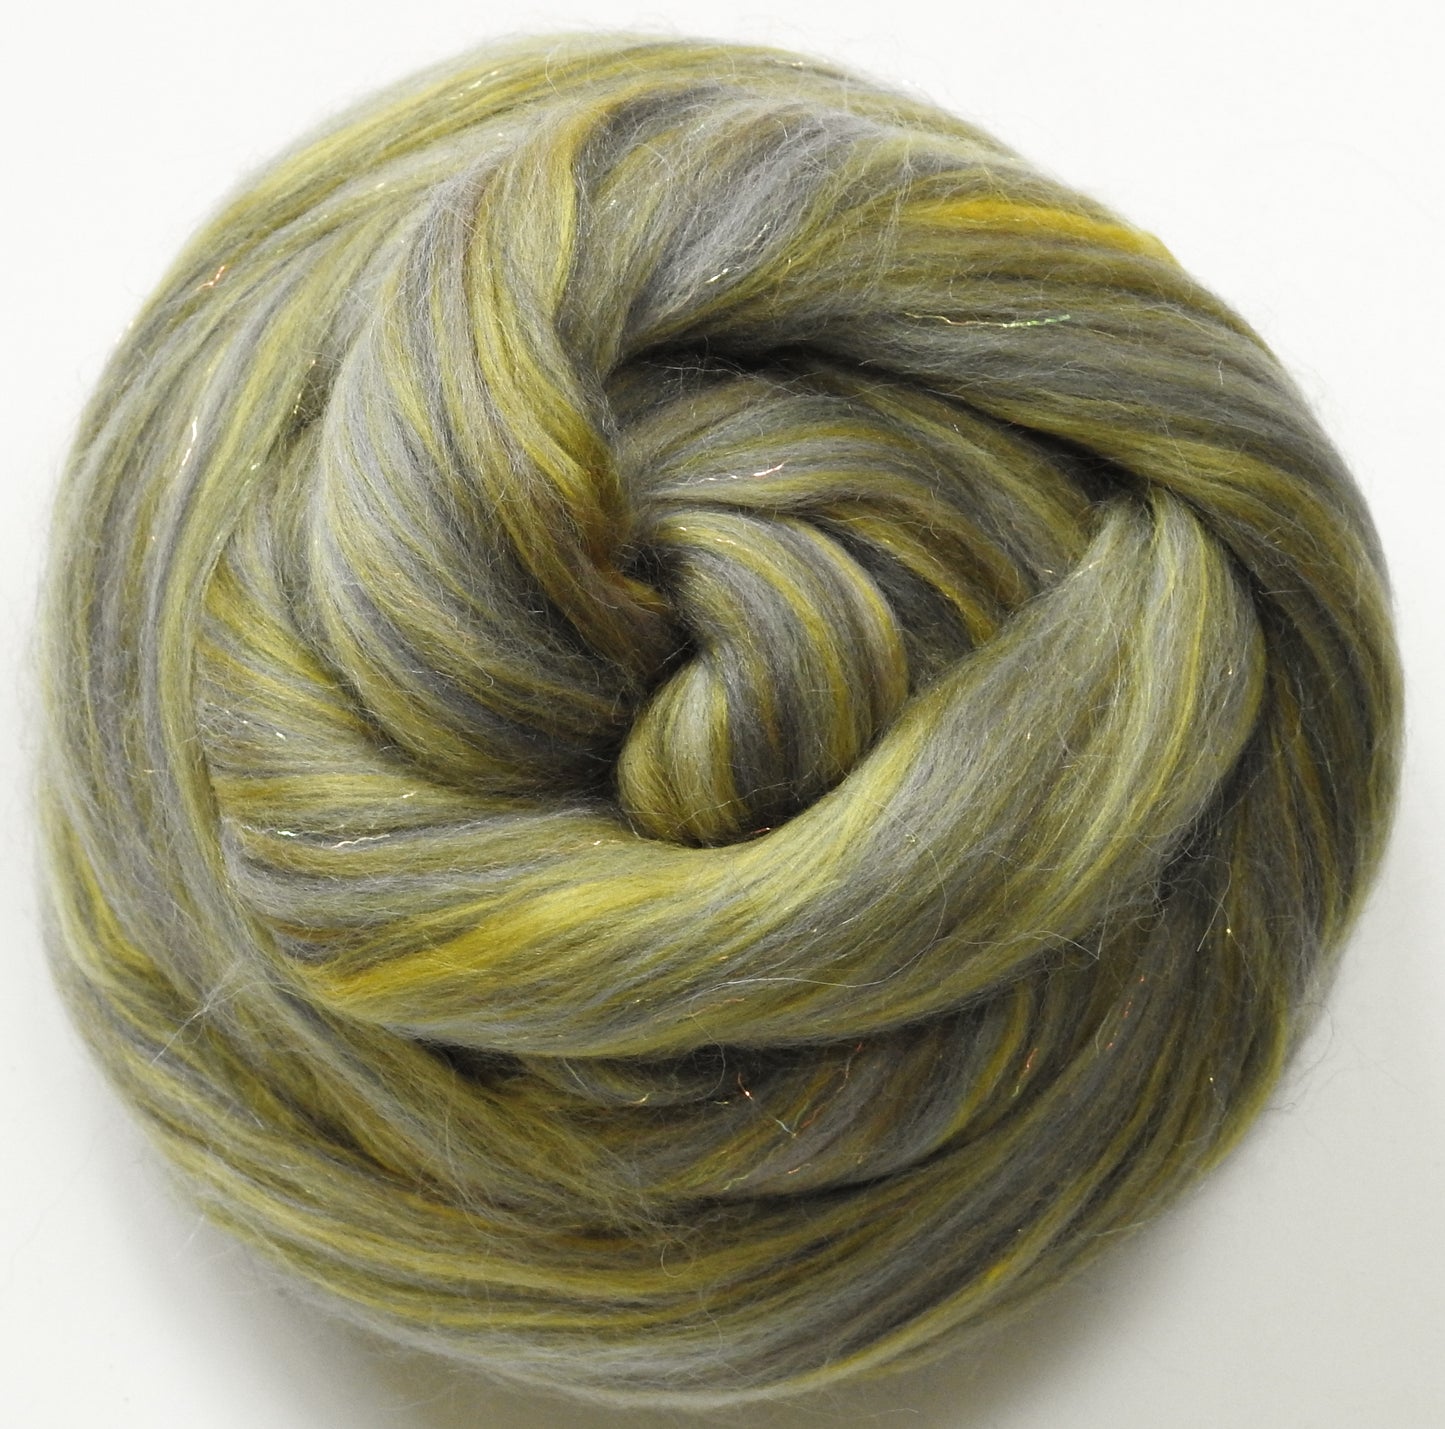 Hithlain ( Elven rope) - Merino/Peduncle & Mulberry Silk/Grey Baby Alpaca/ Iridescent Stellina (60/25/10/5)